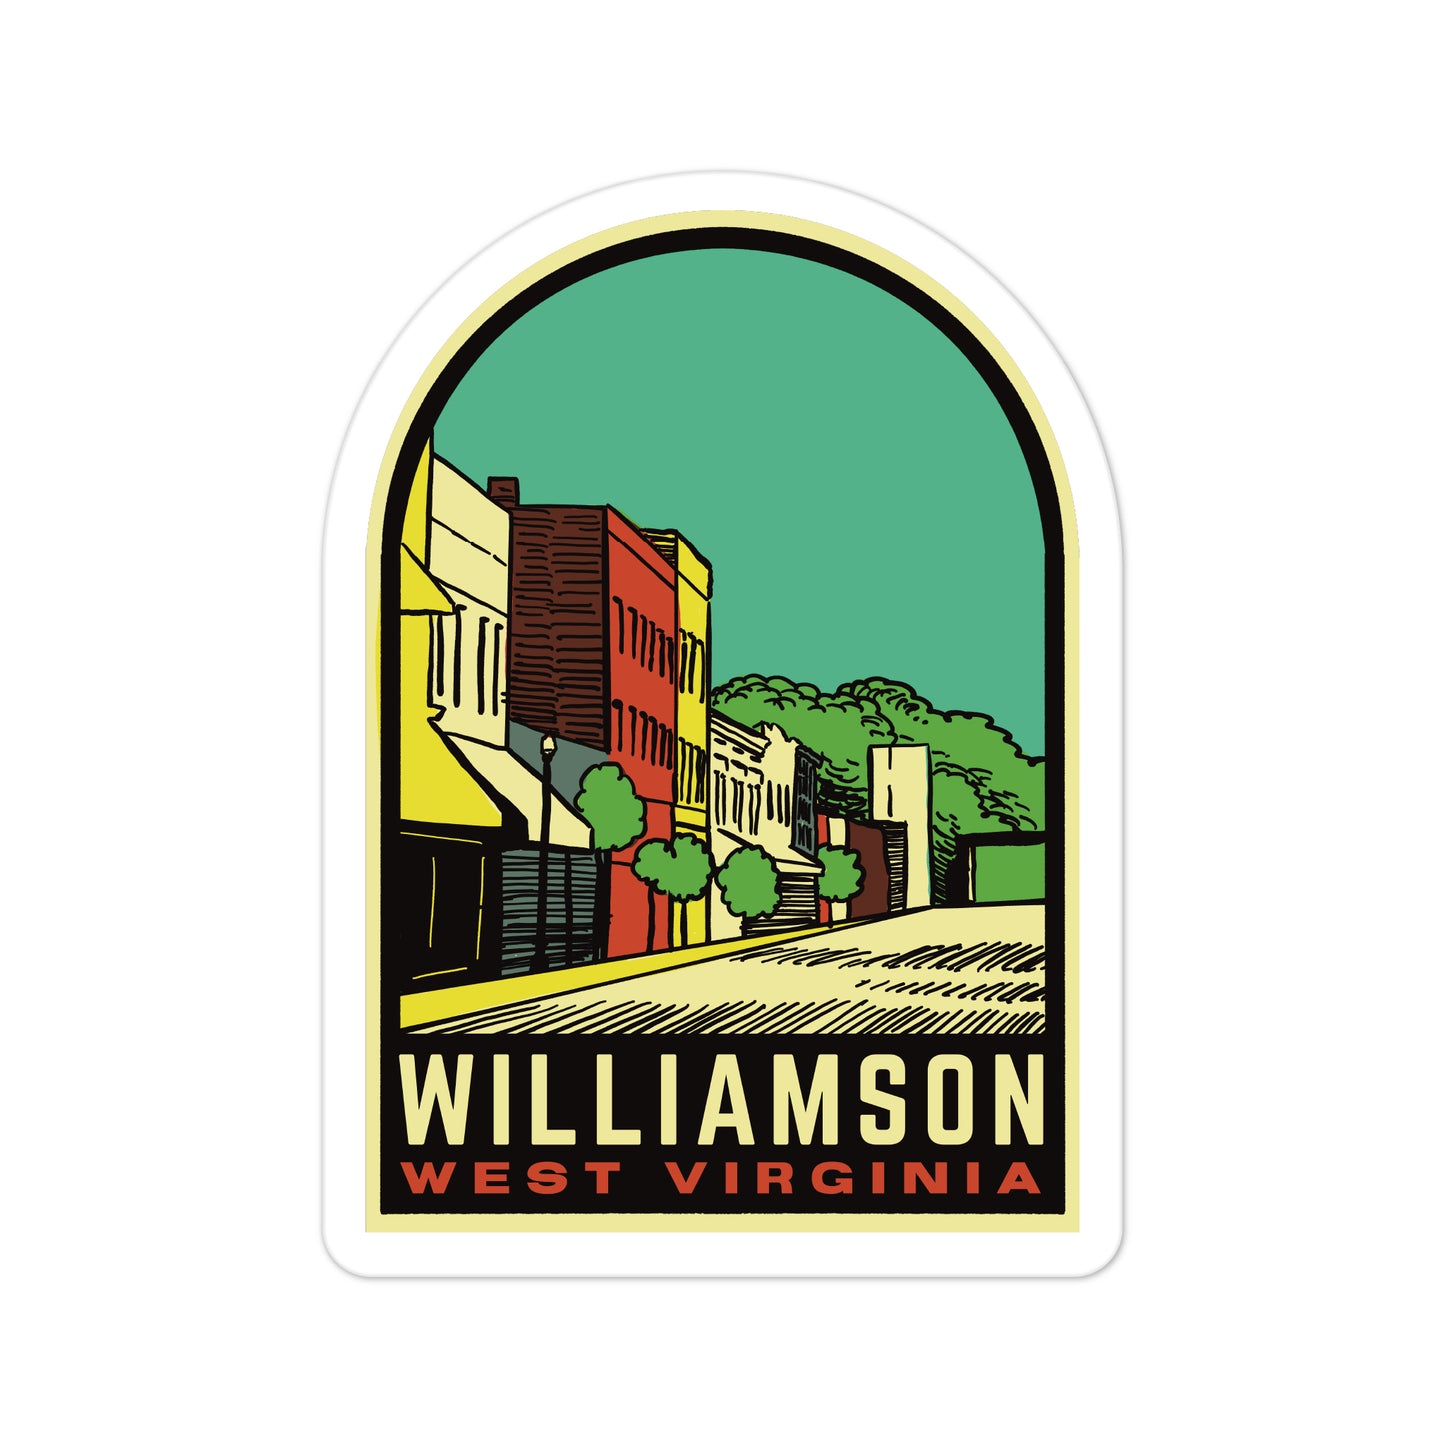 A sticker of Williamson West Virginia